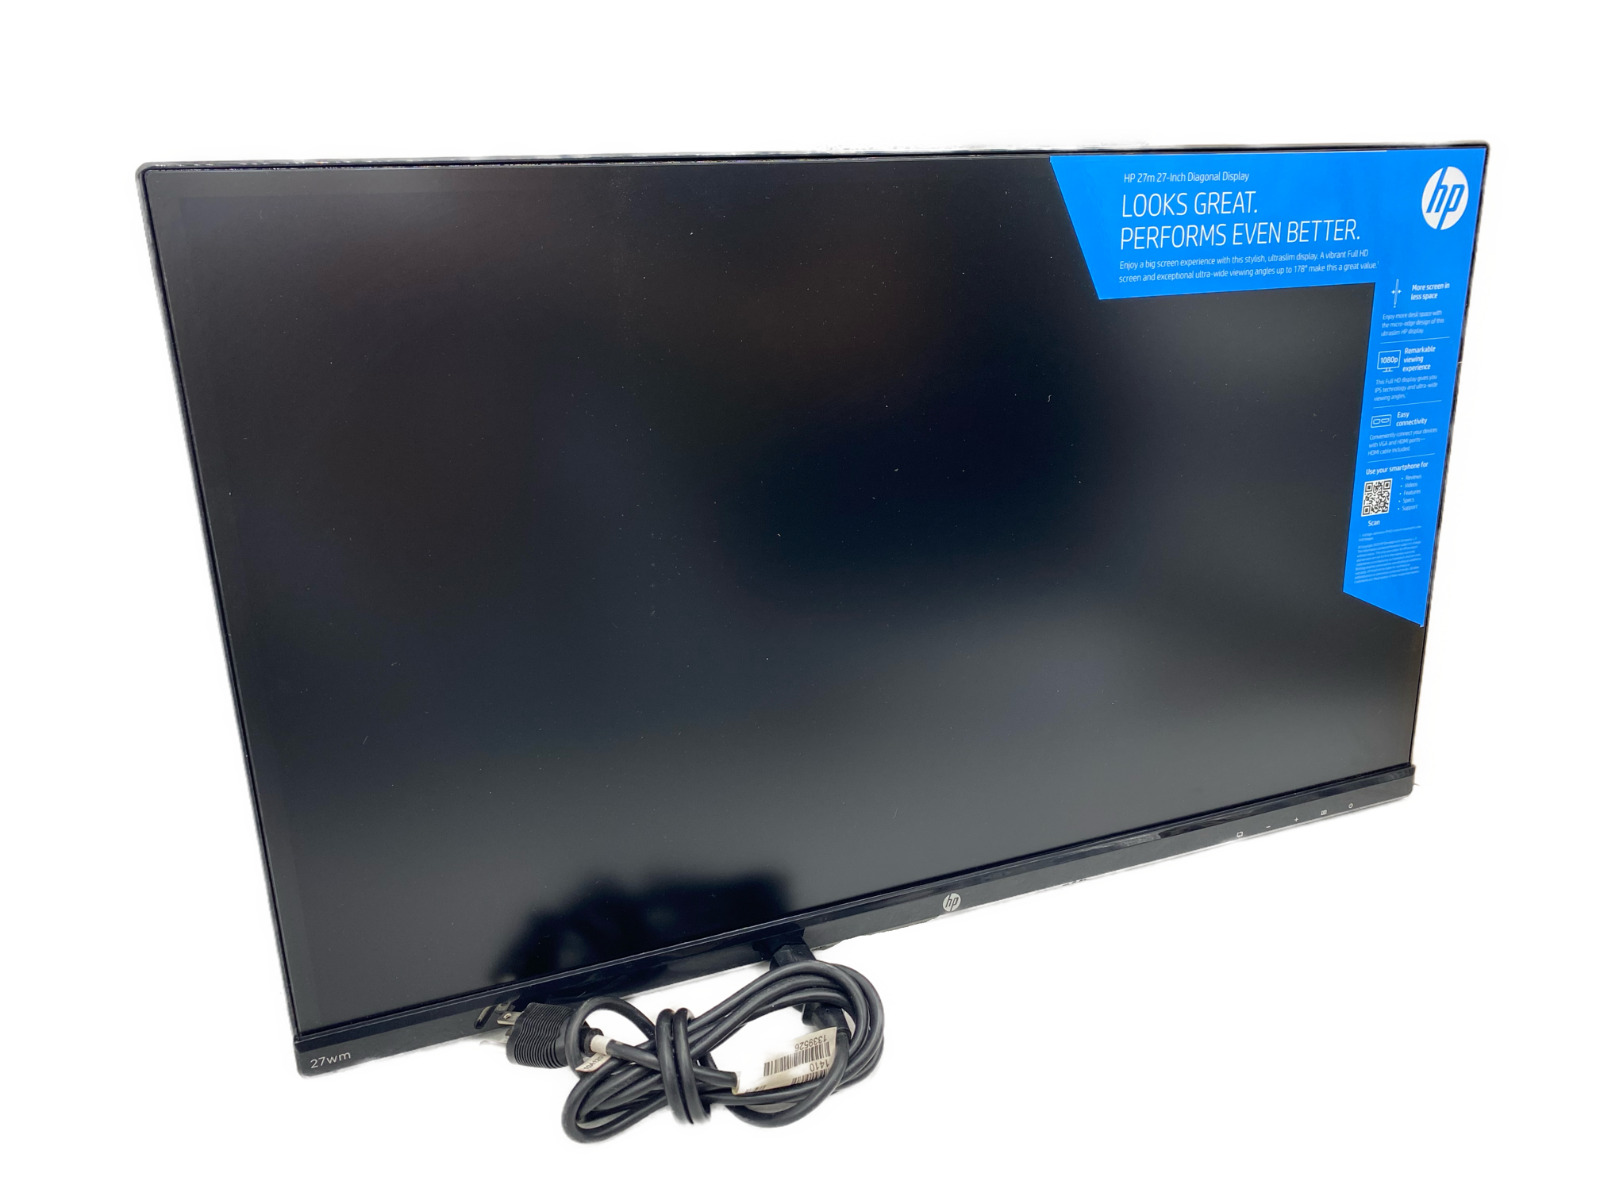 HP 27wm 27 inch LED Backlit Monitor Display 1080P w/power cord 90-day warranty